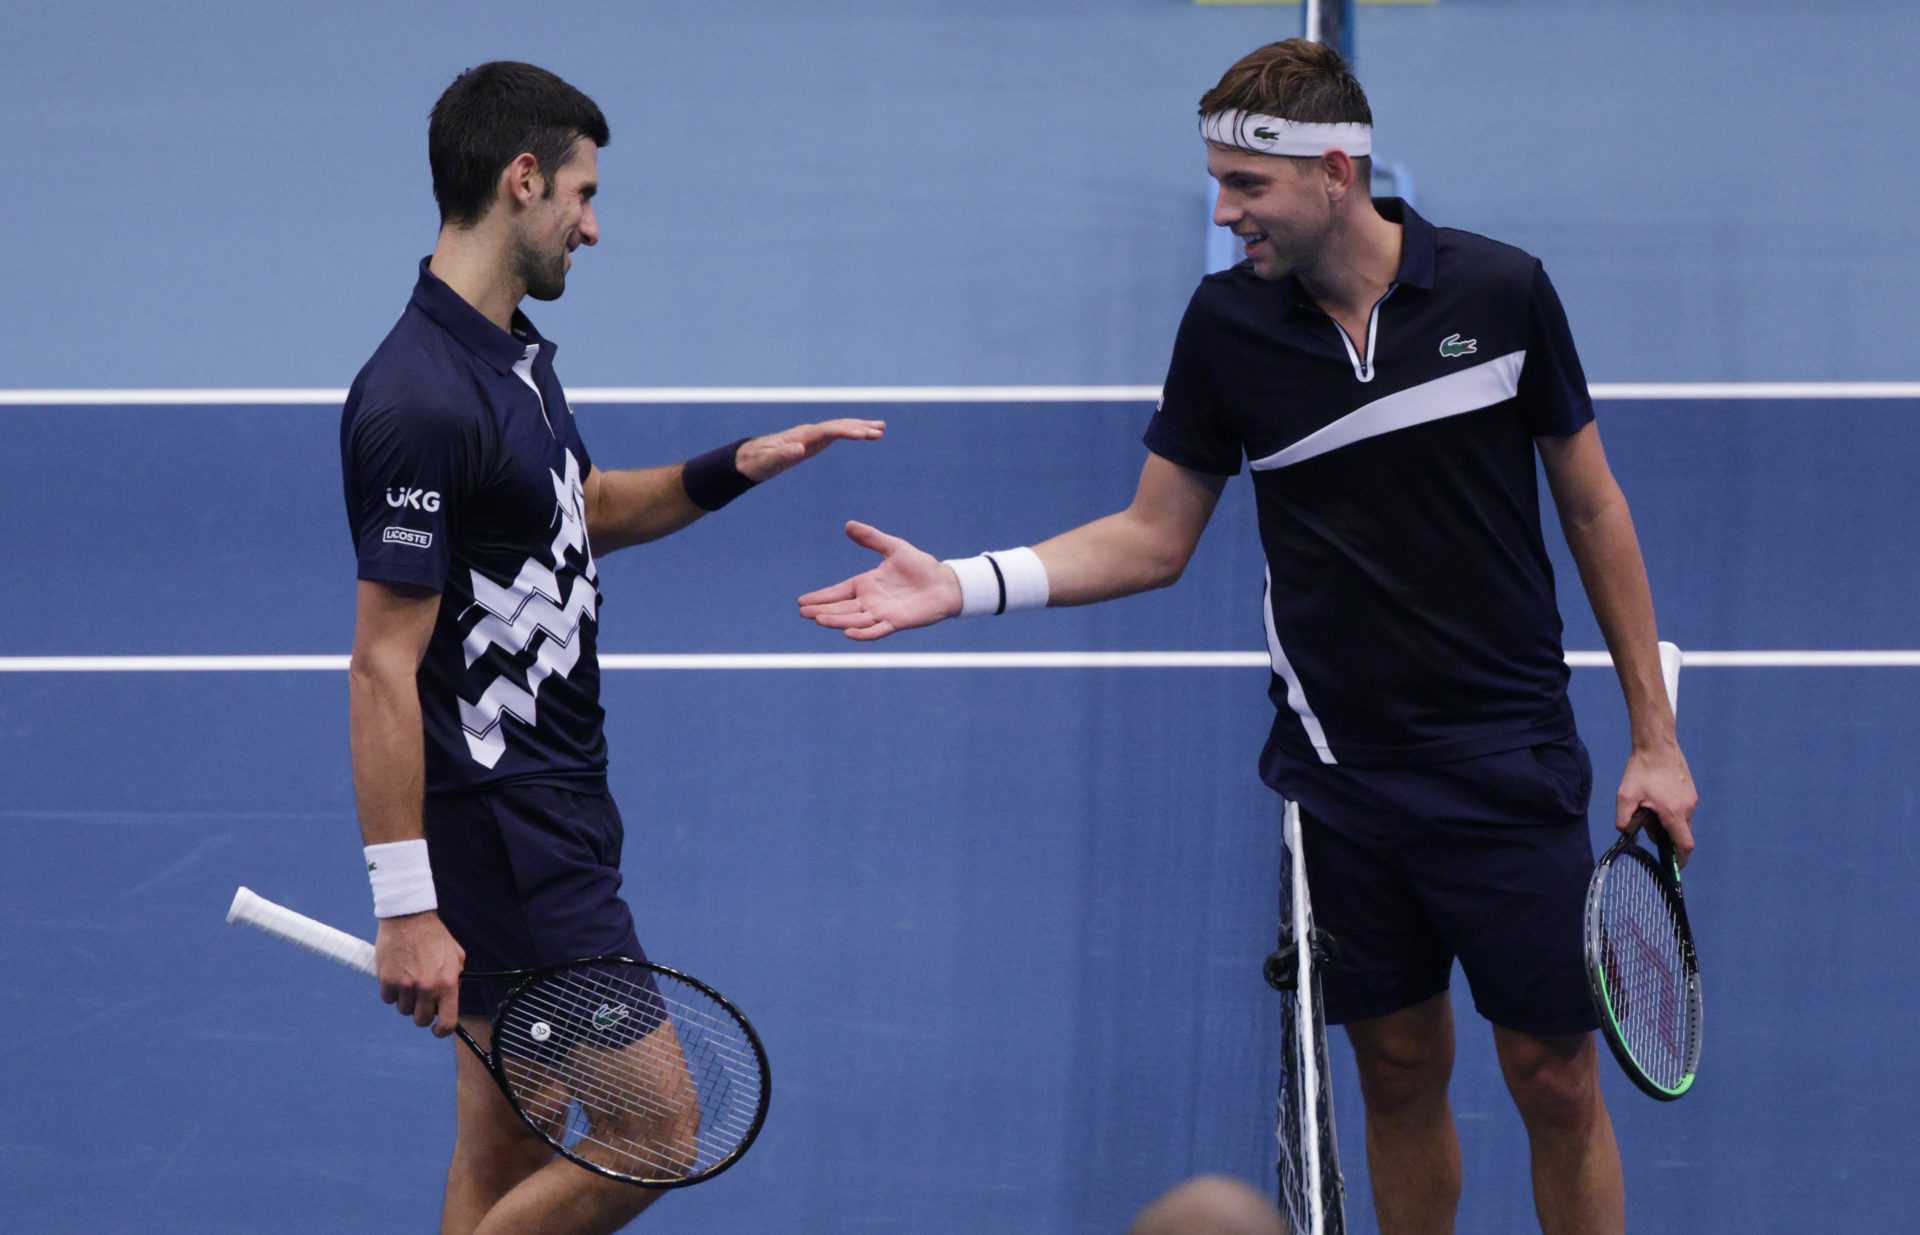 REGARDER: Novak Djokovic remporte un rallye difficile avec un jeu intelligent sur le net